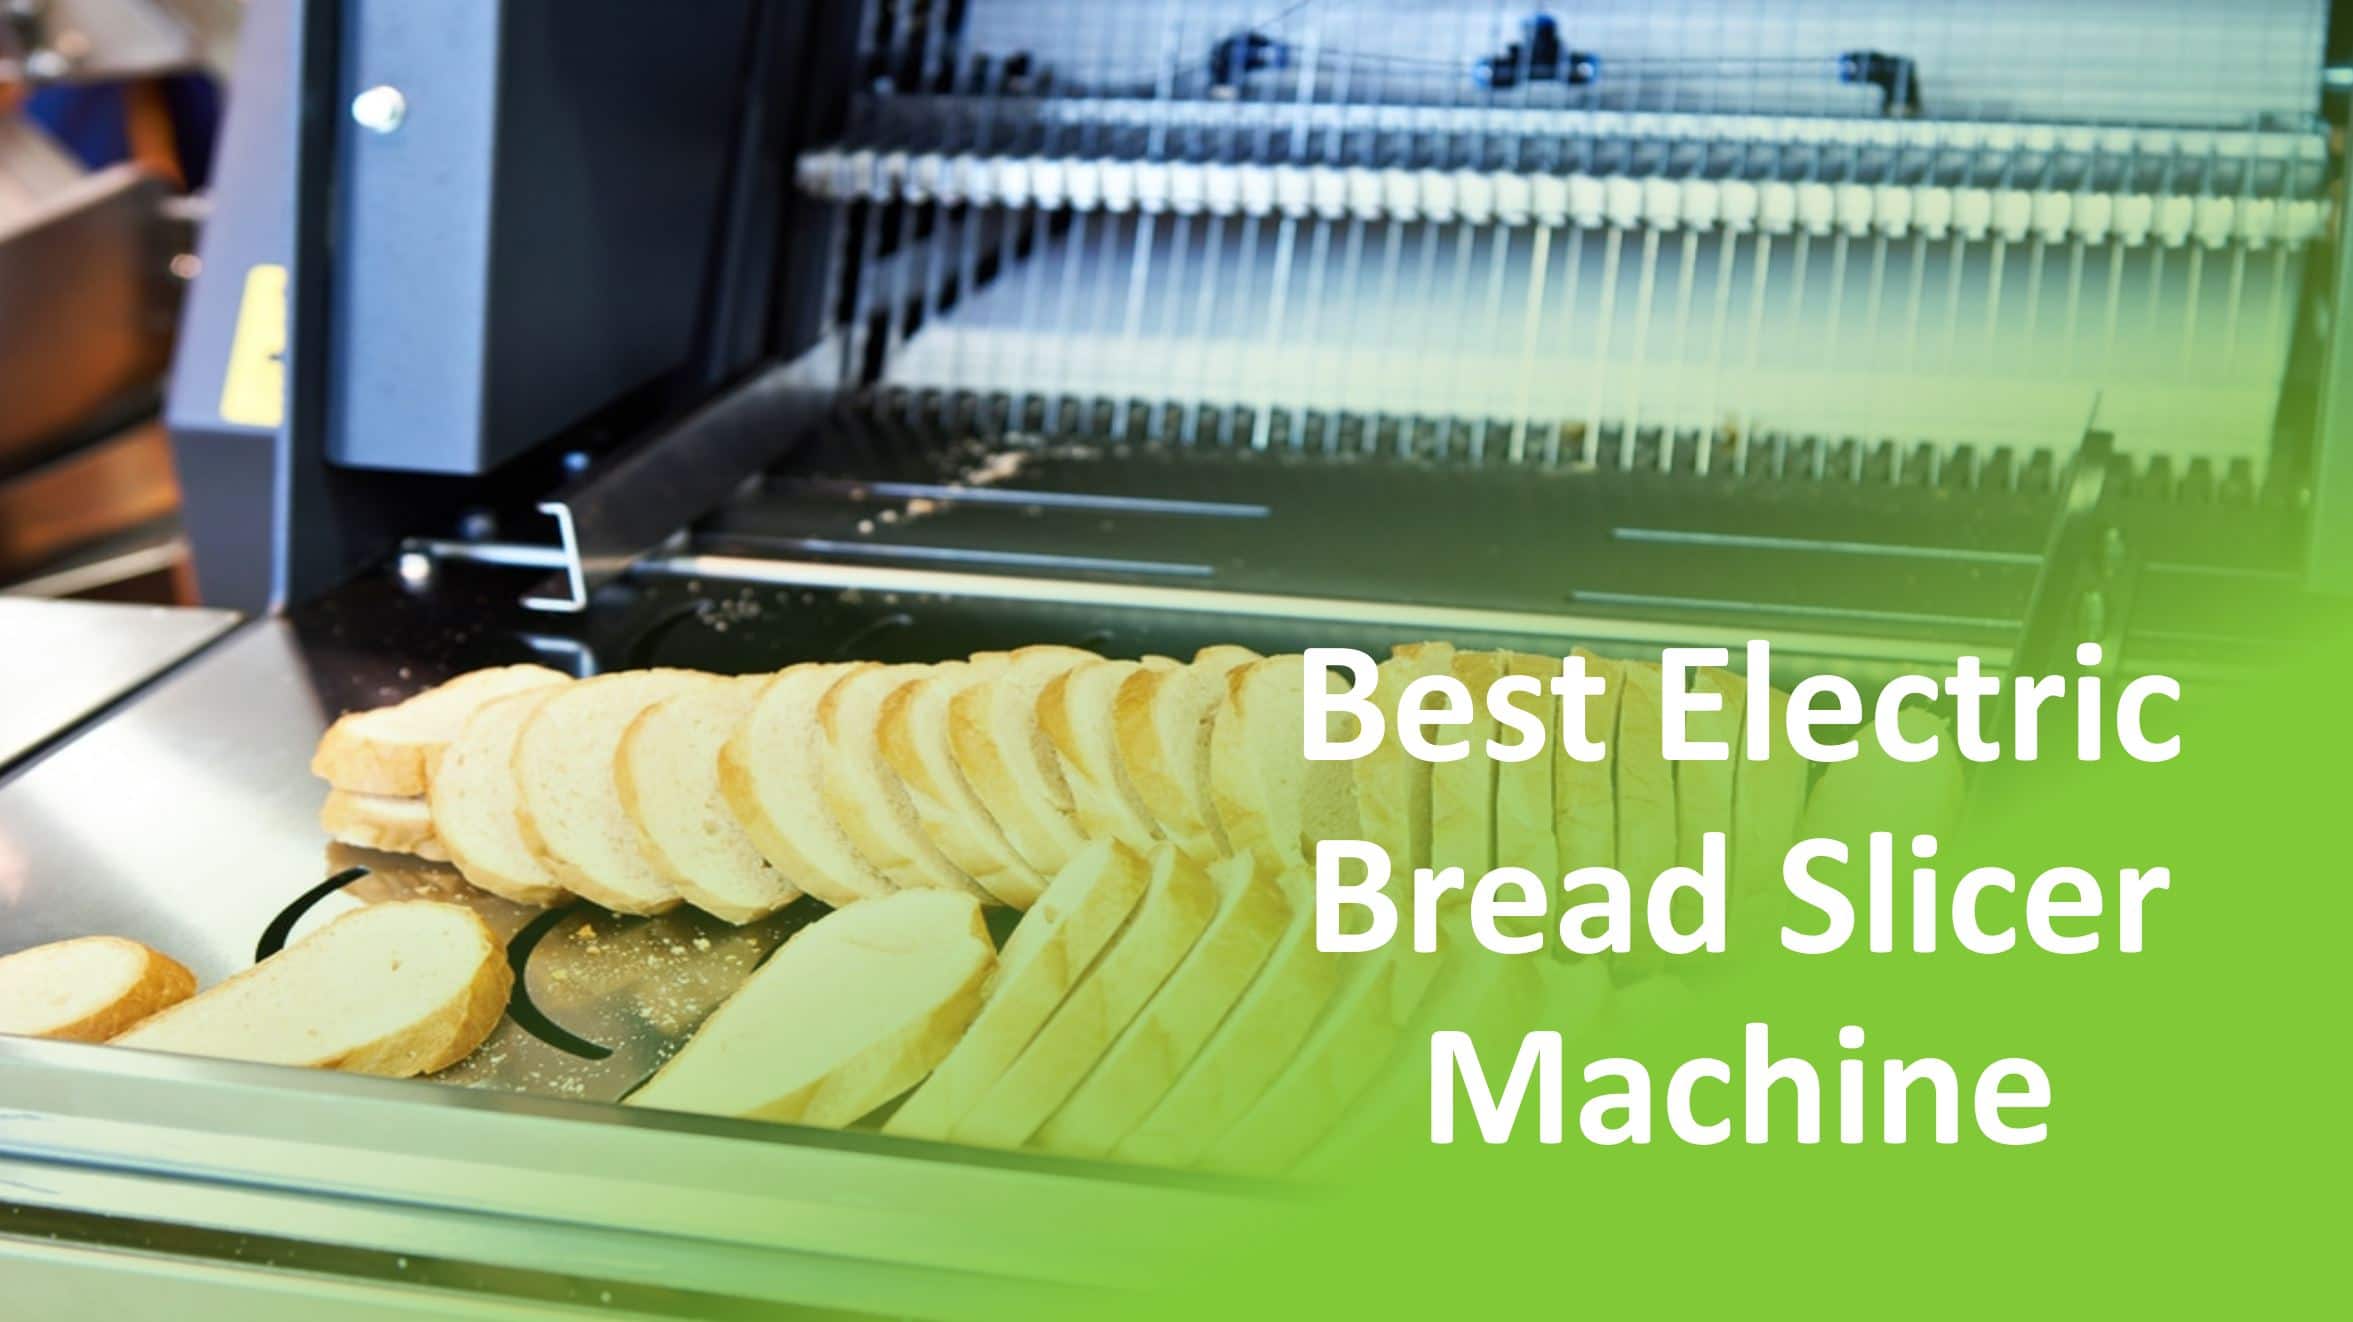 https://www.foodchamps.org/wp-content/uploads/2021/05/best-electric-bread-slicer-machine.jpg